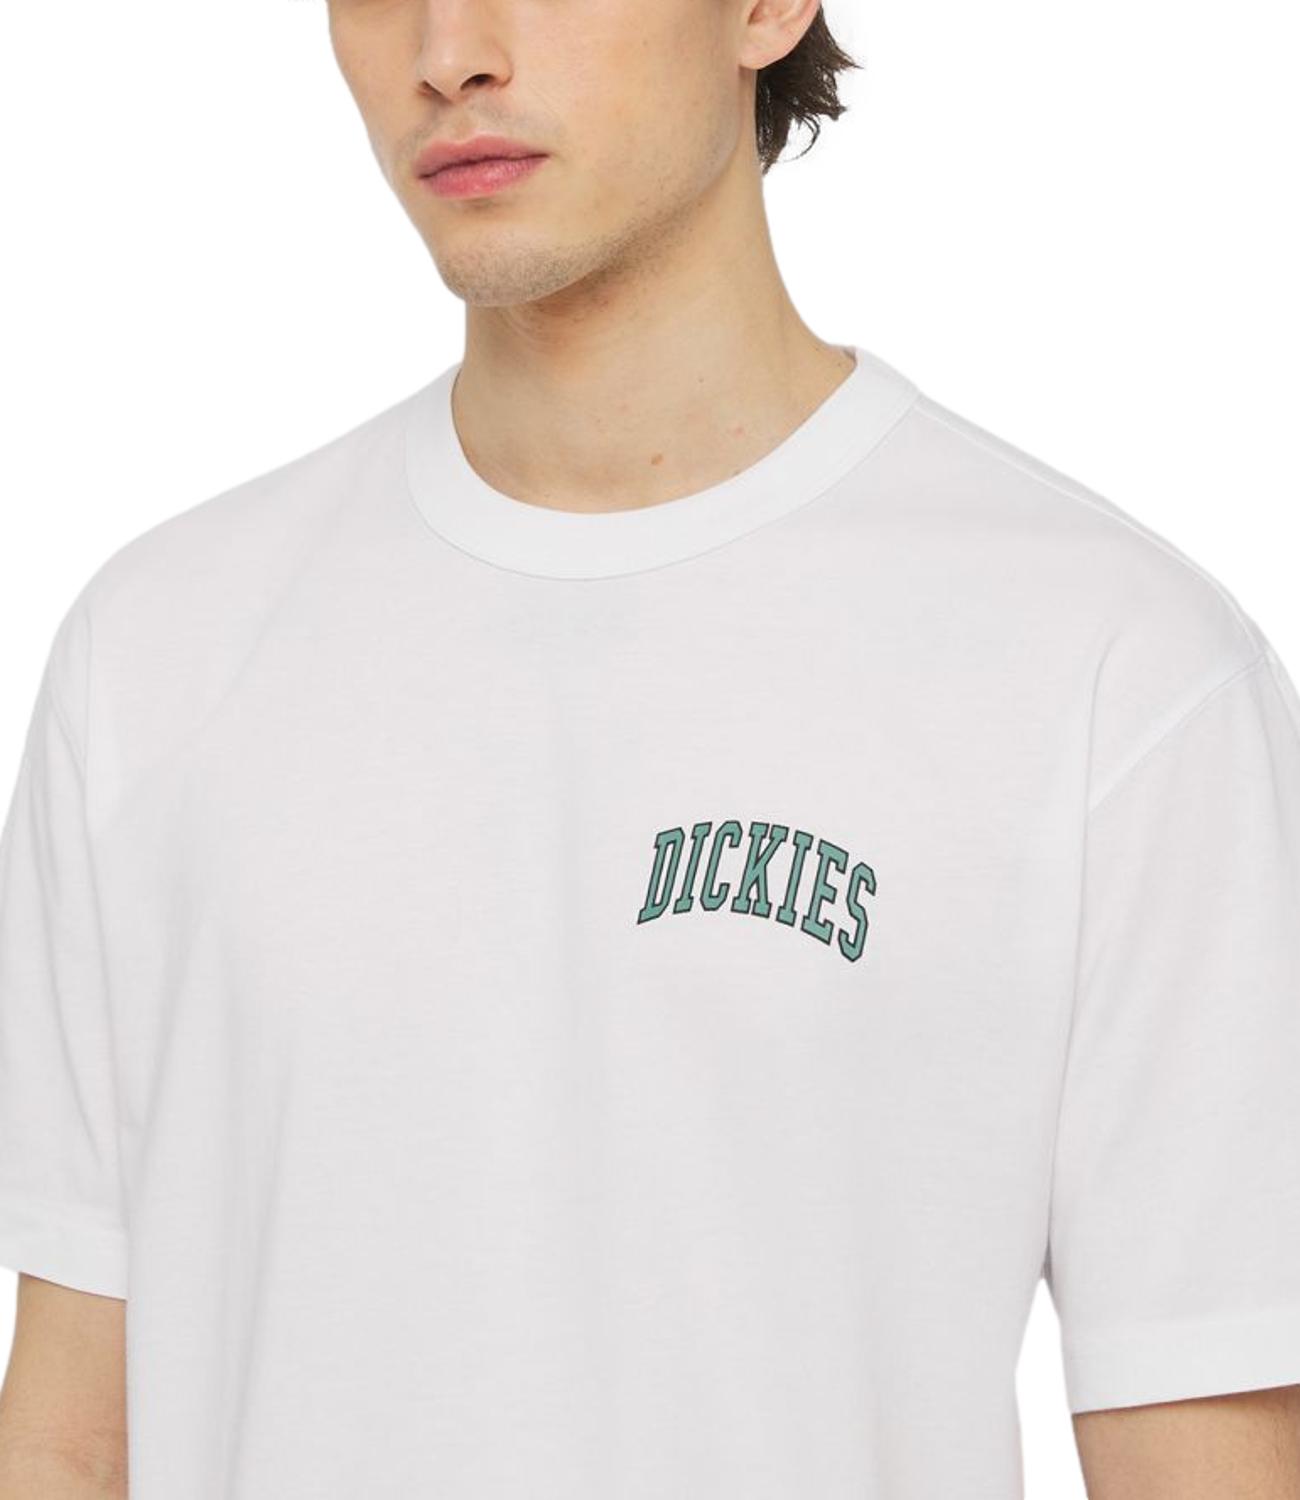 T-shirt Dickies bianca con logo verde Aitkin